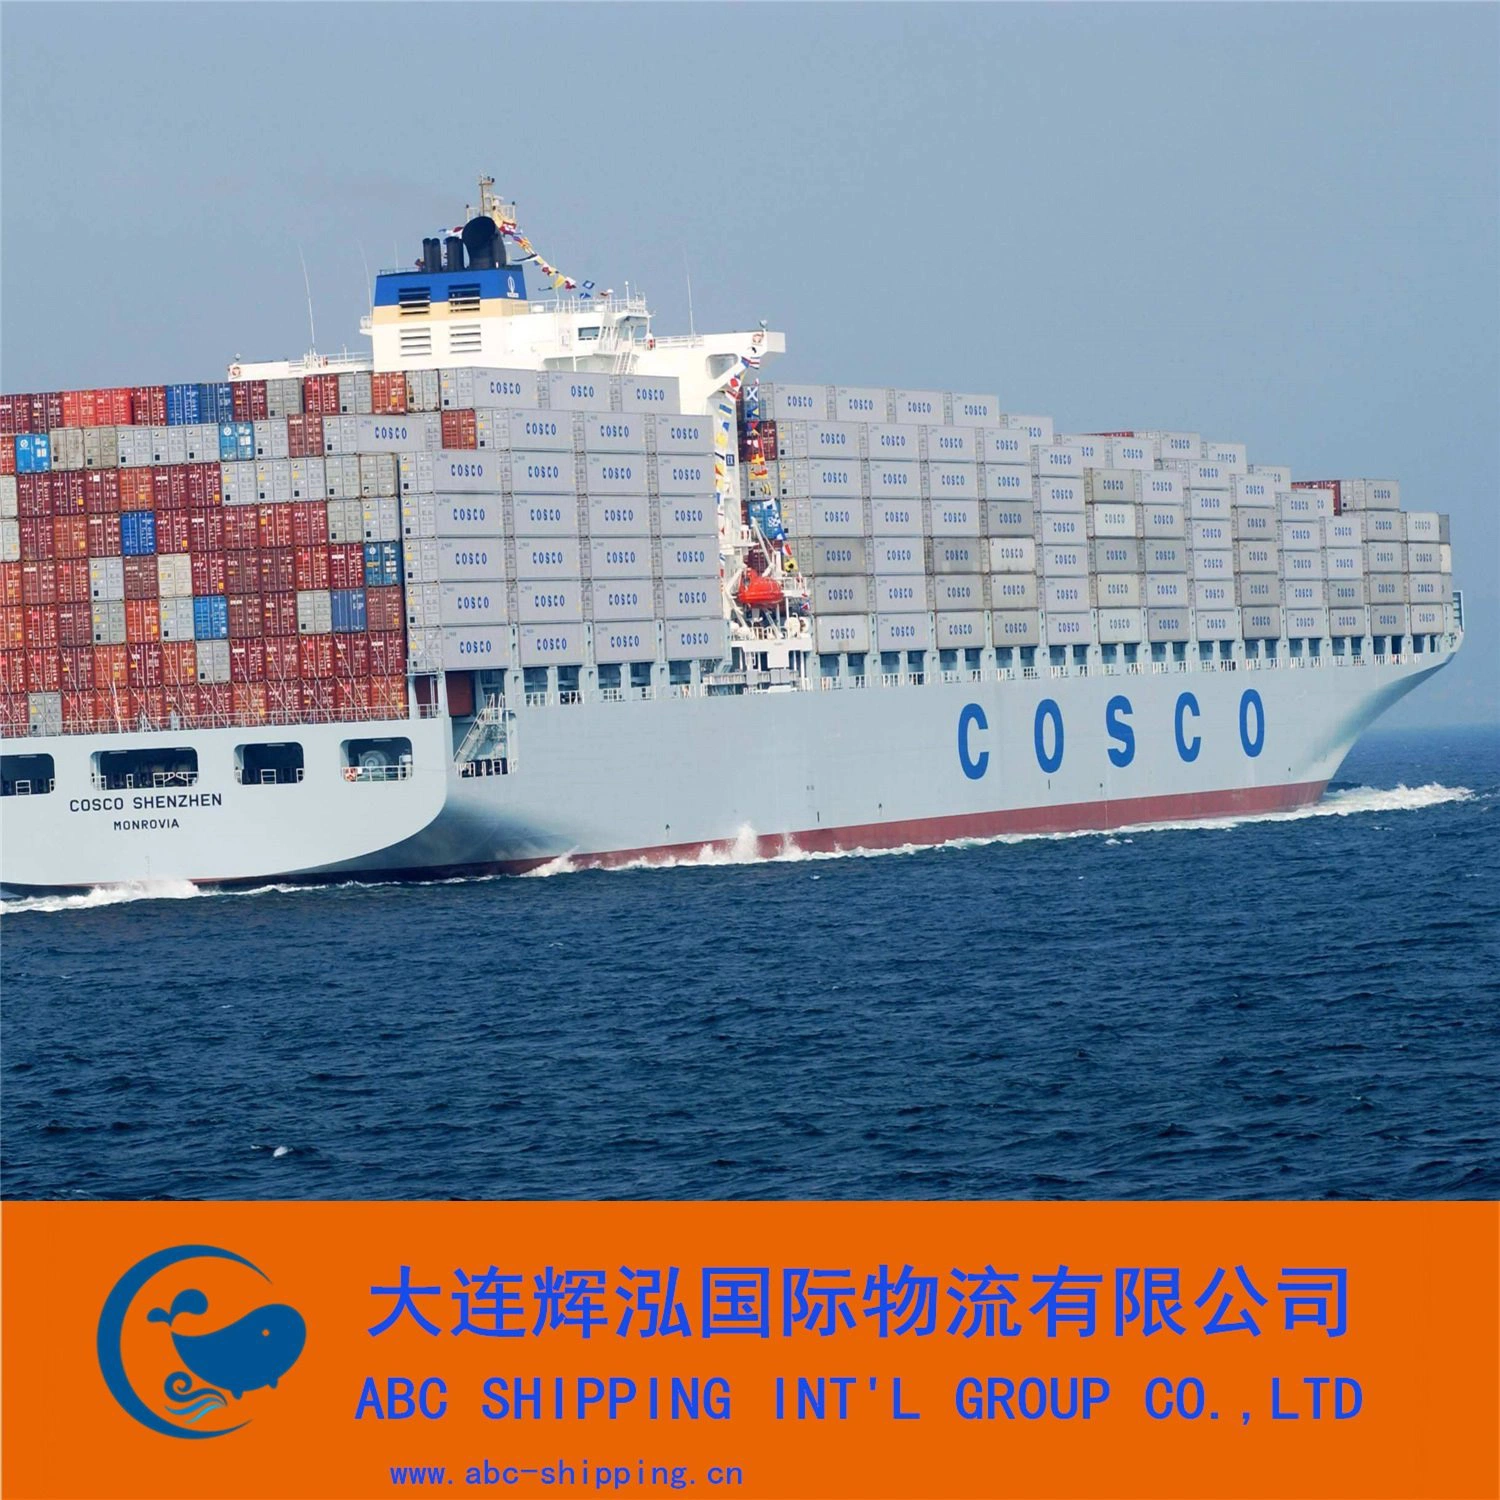 International Logistics Services Focus on Maritime Goods